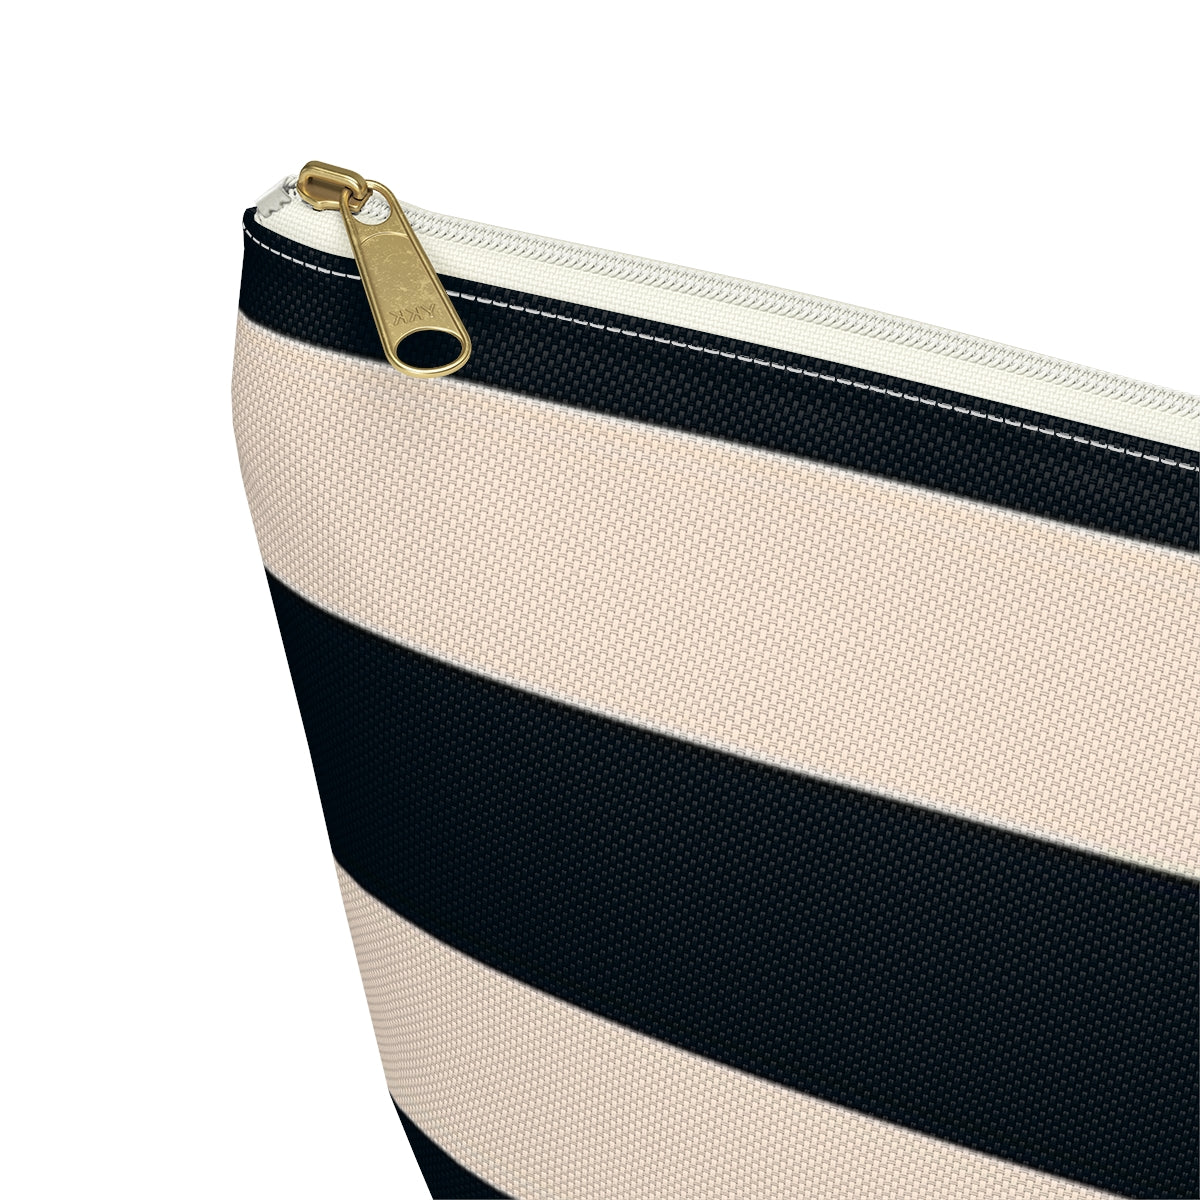 Big Bottom Zipper Pouch - Navy/Cream Stripes